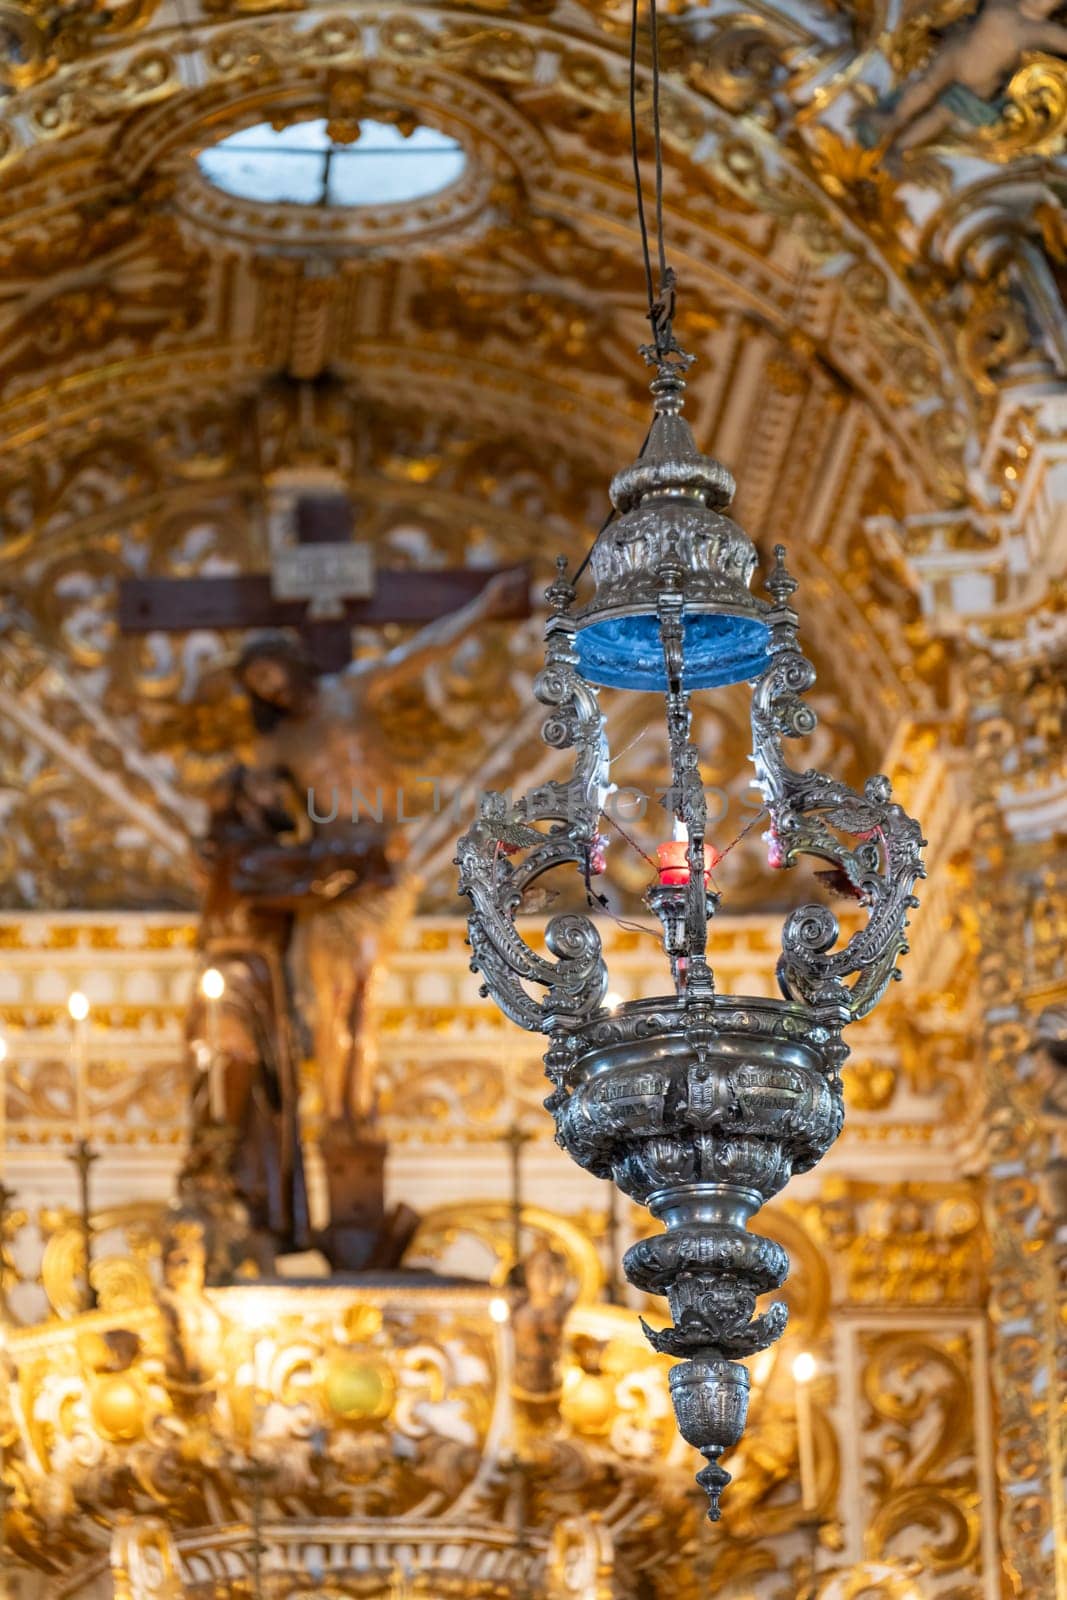 Silver lamp detailed against church's ornate golden interior.